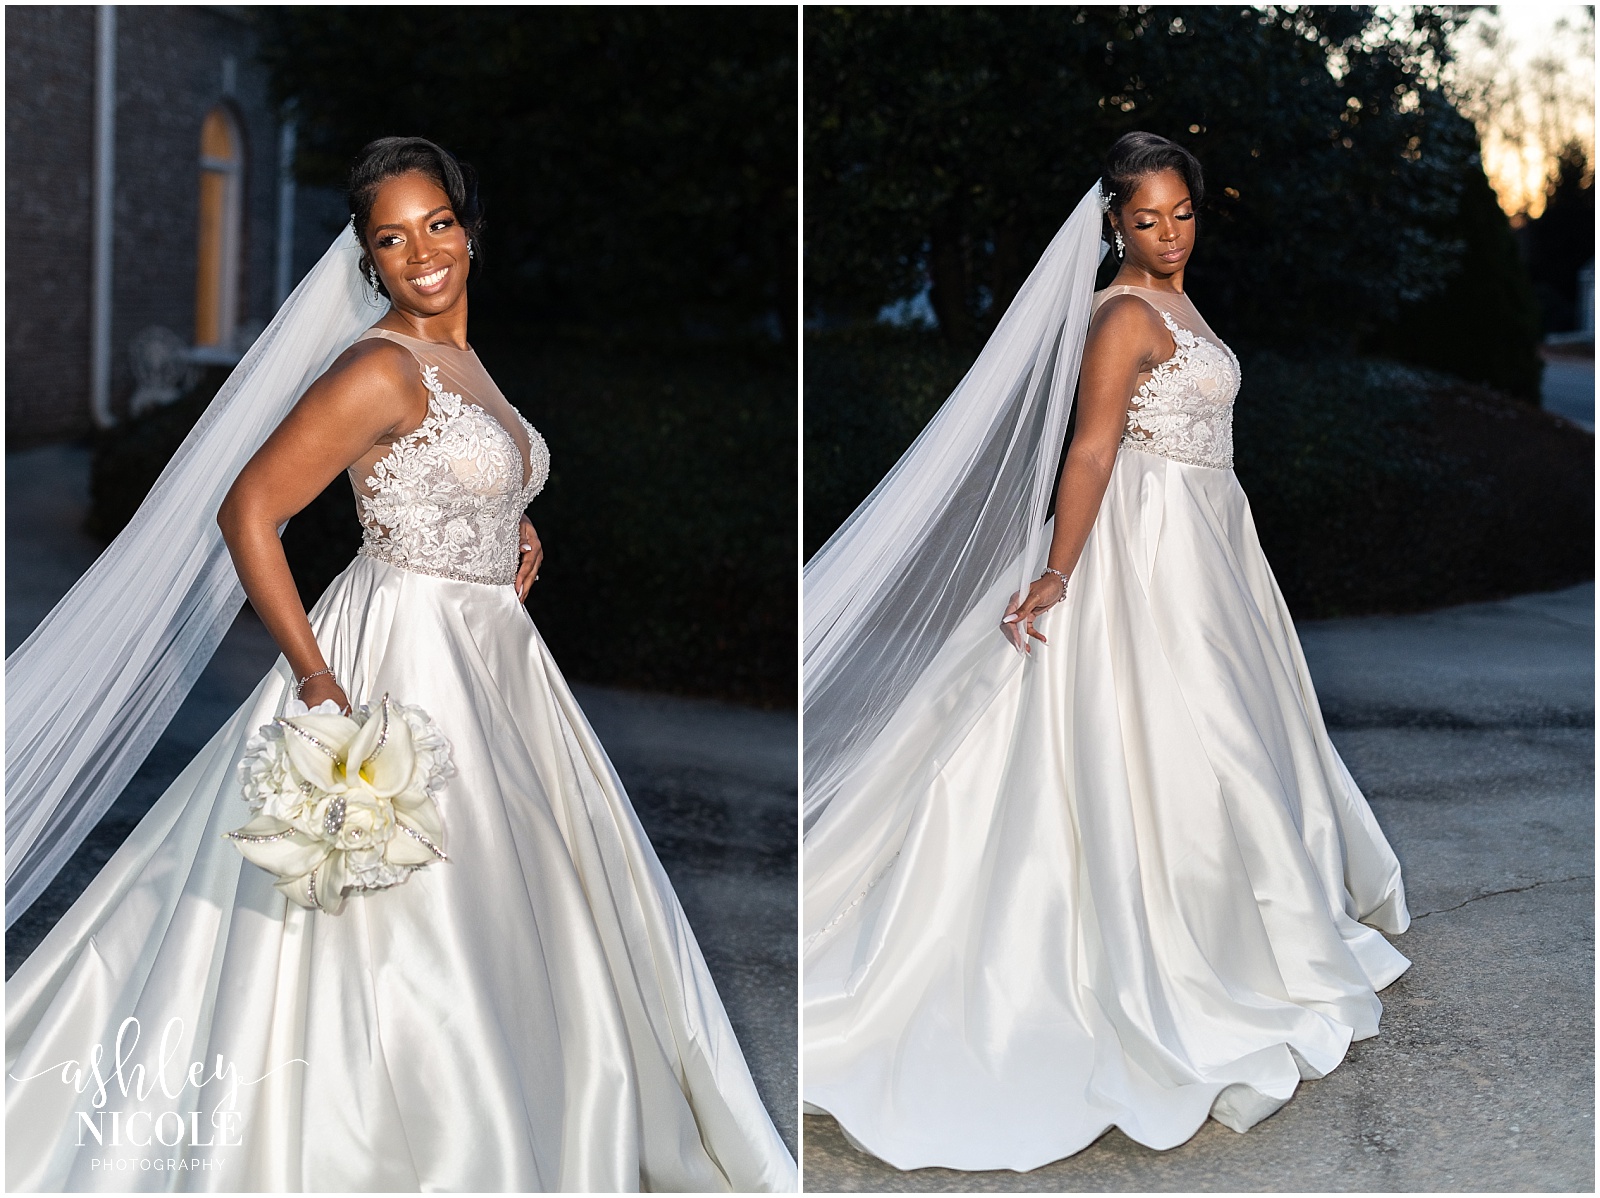 Pristine Chapel Wedding Best Atlanta Wedding Photographer Ashley Nicole Photography